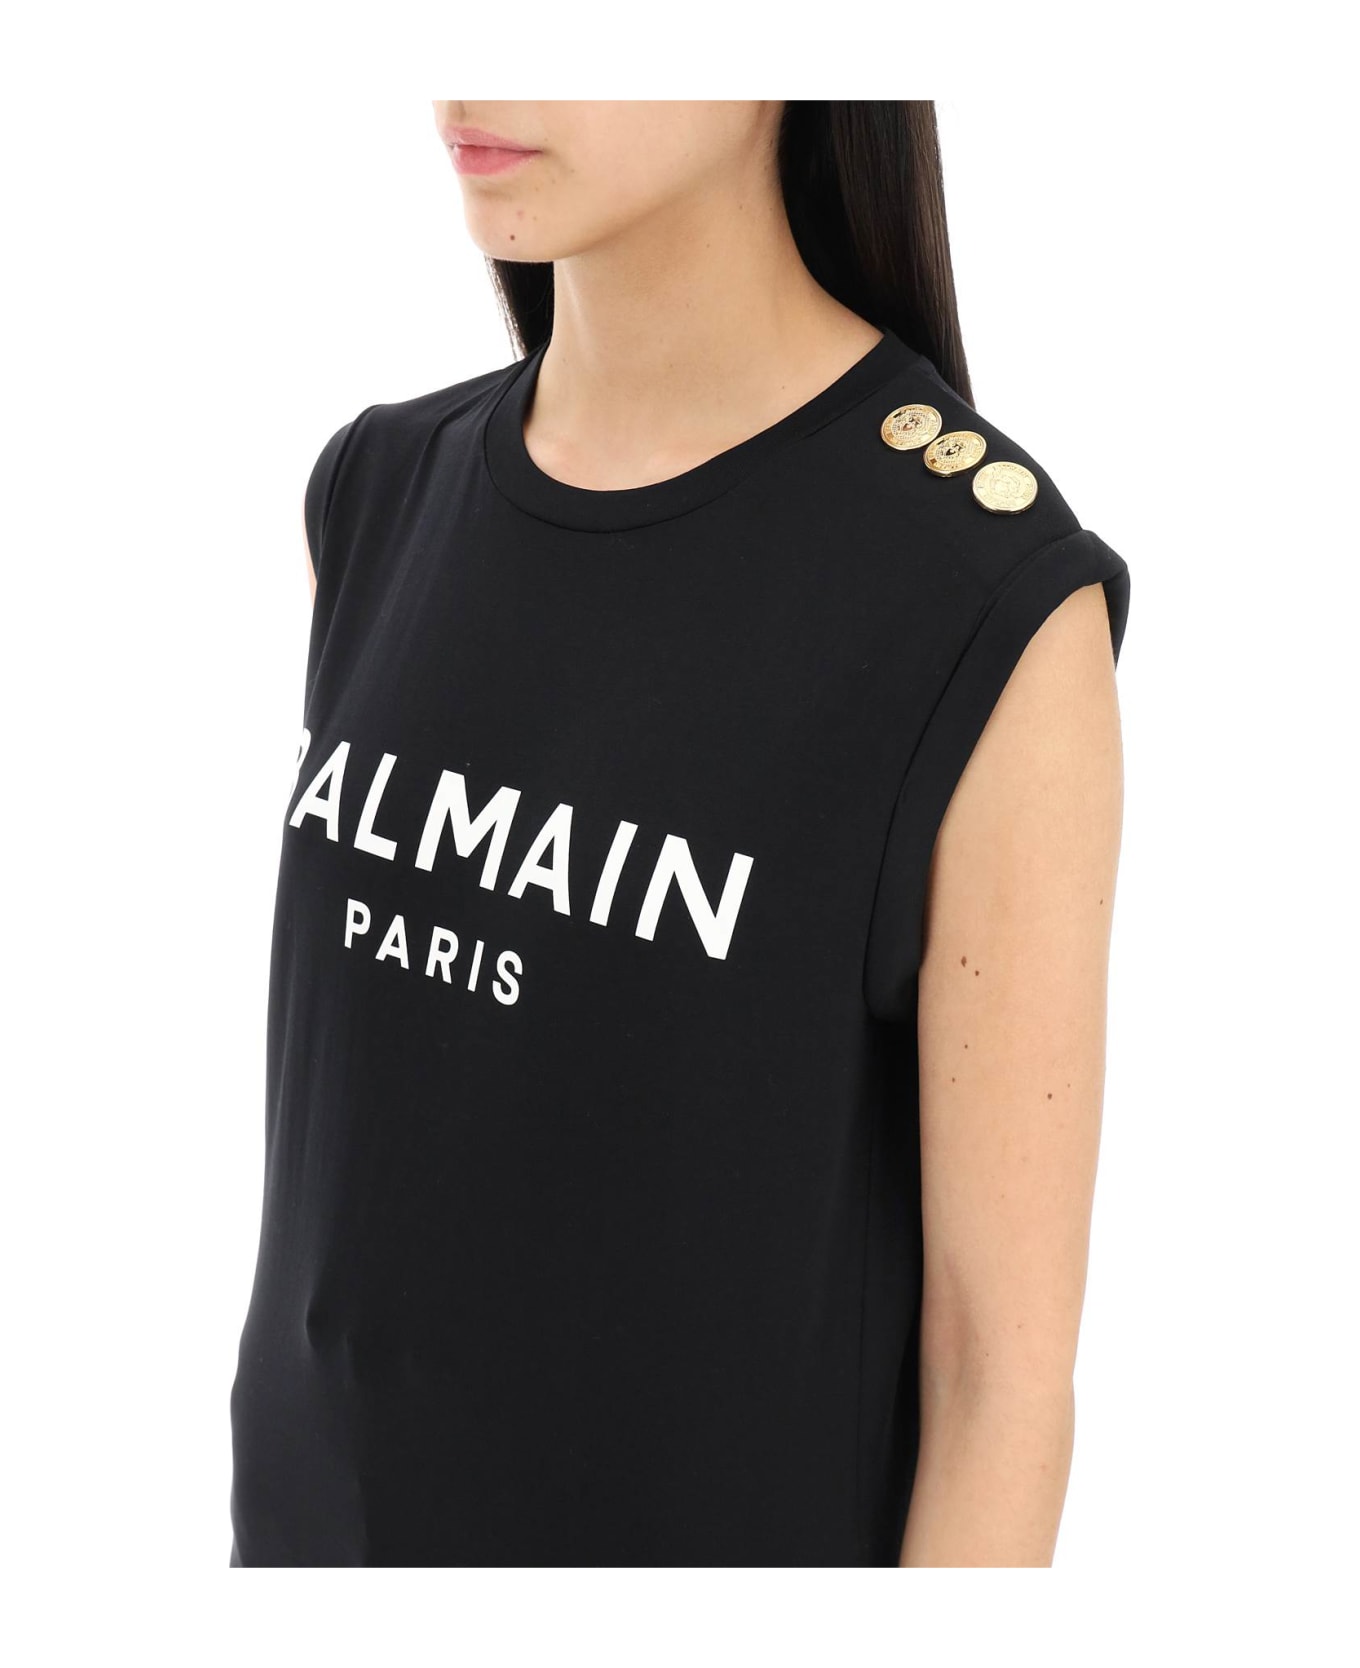 Balmain Logo Top With Buttons - black Tシャツ